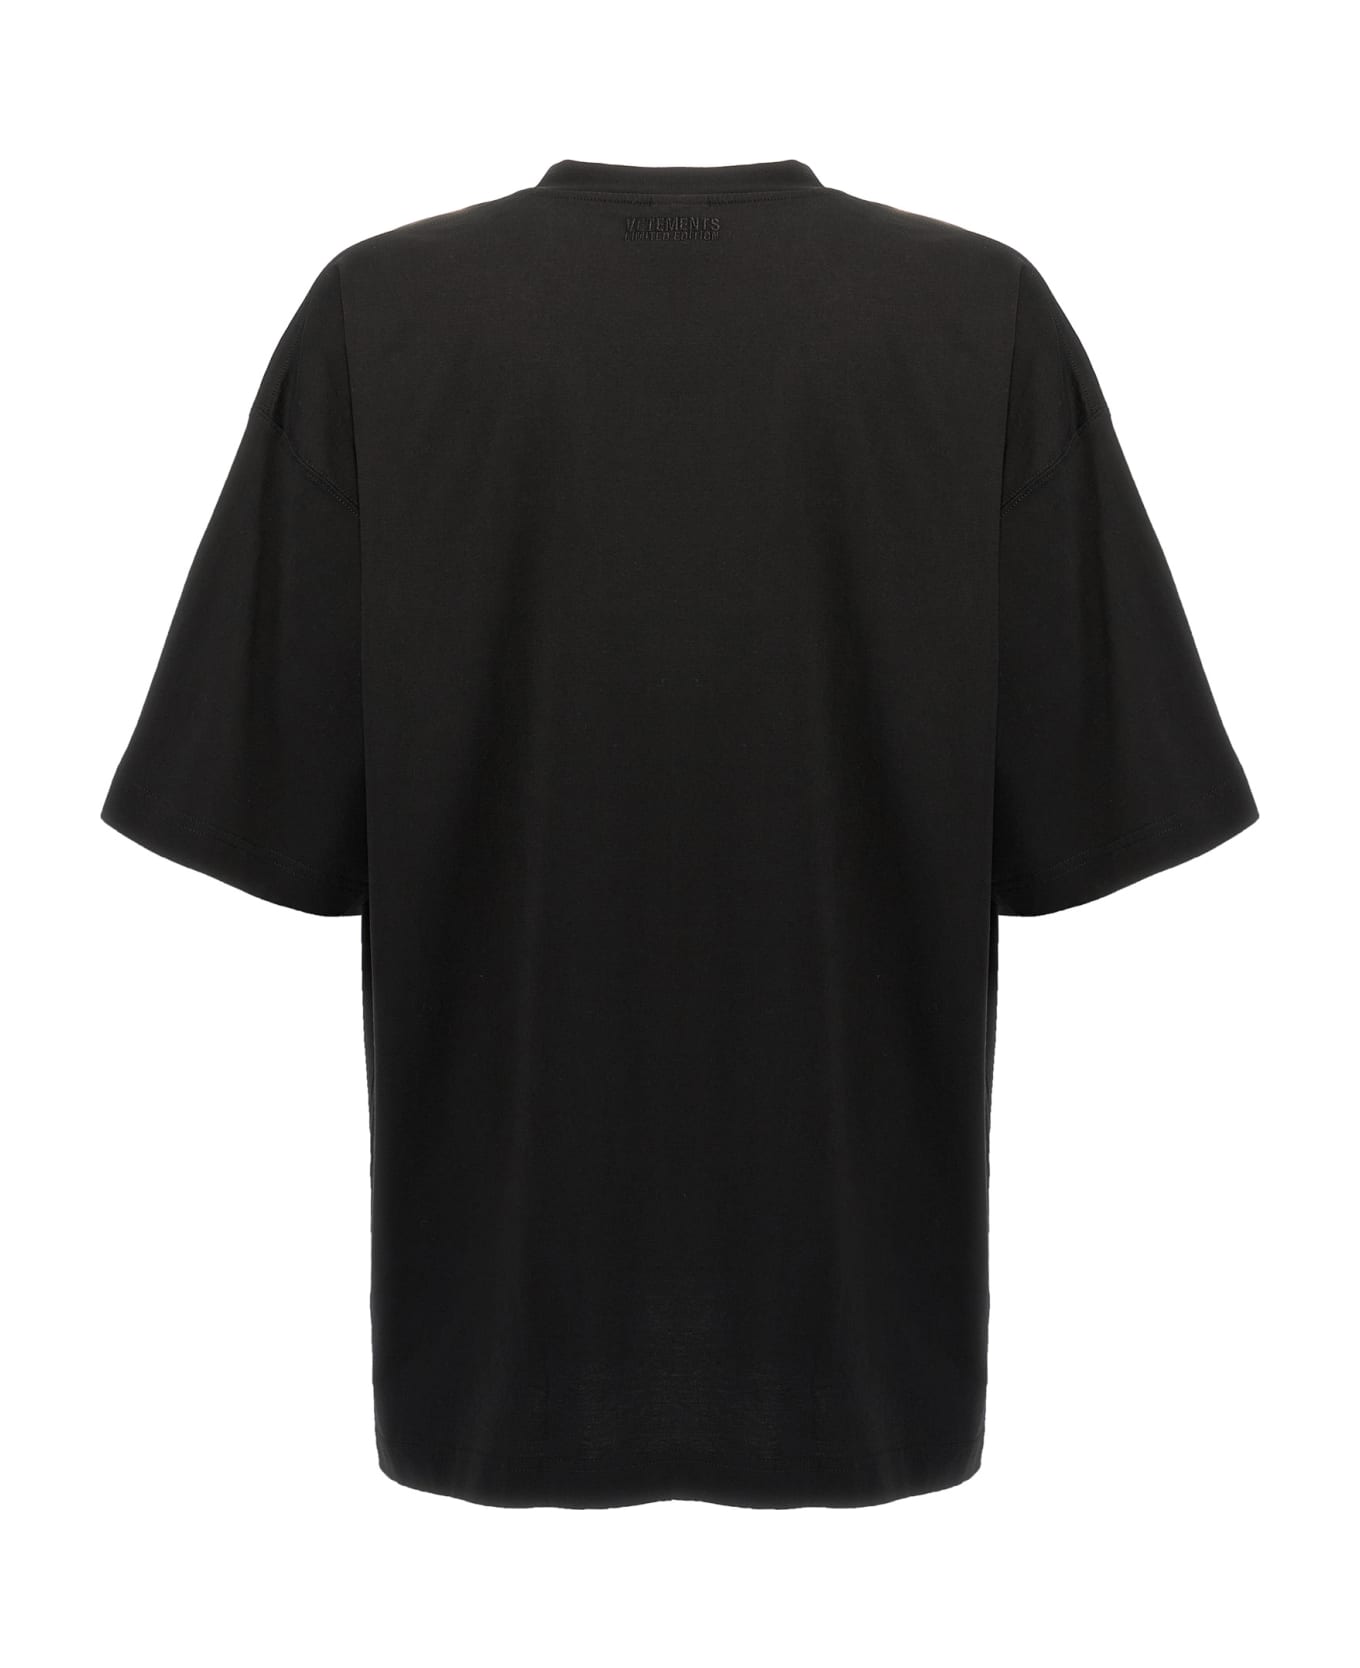 VETEMENTS 'sticker Logo' T-shirt - Black   Tシャツ